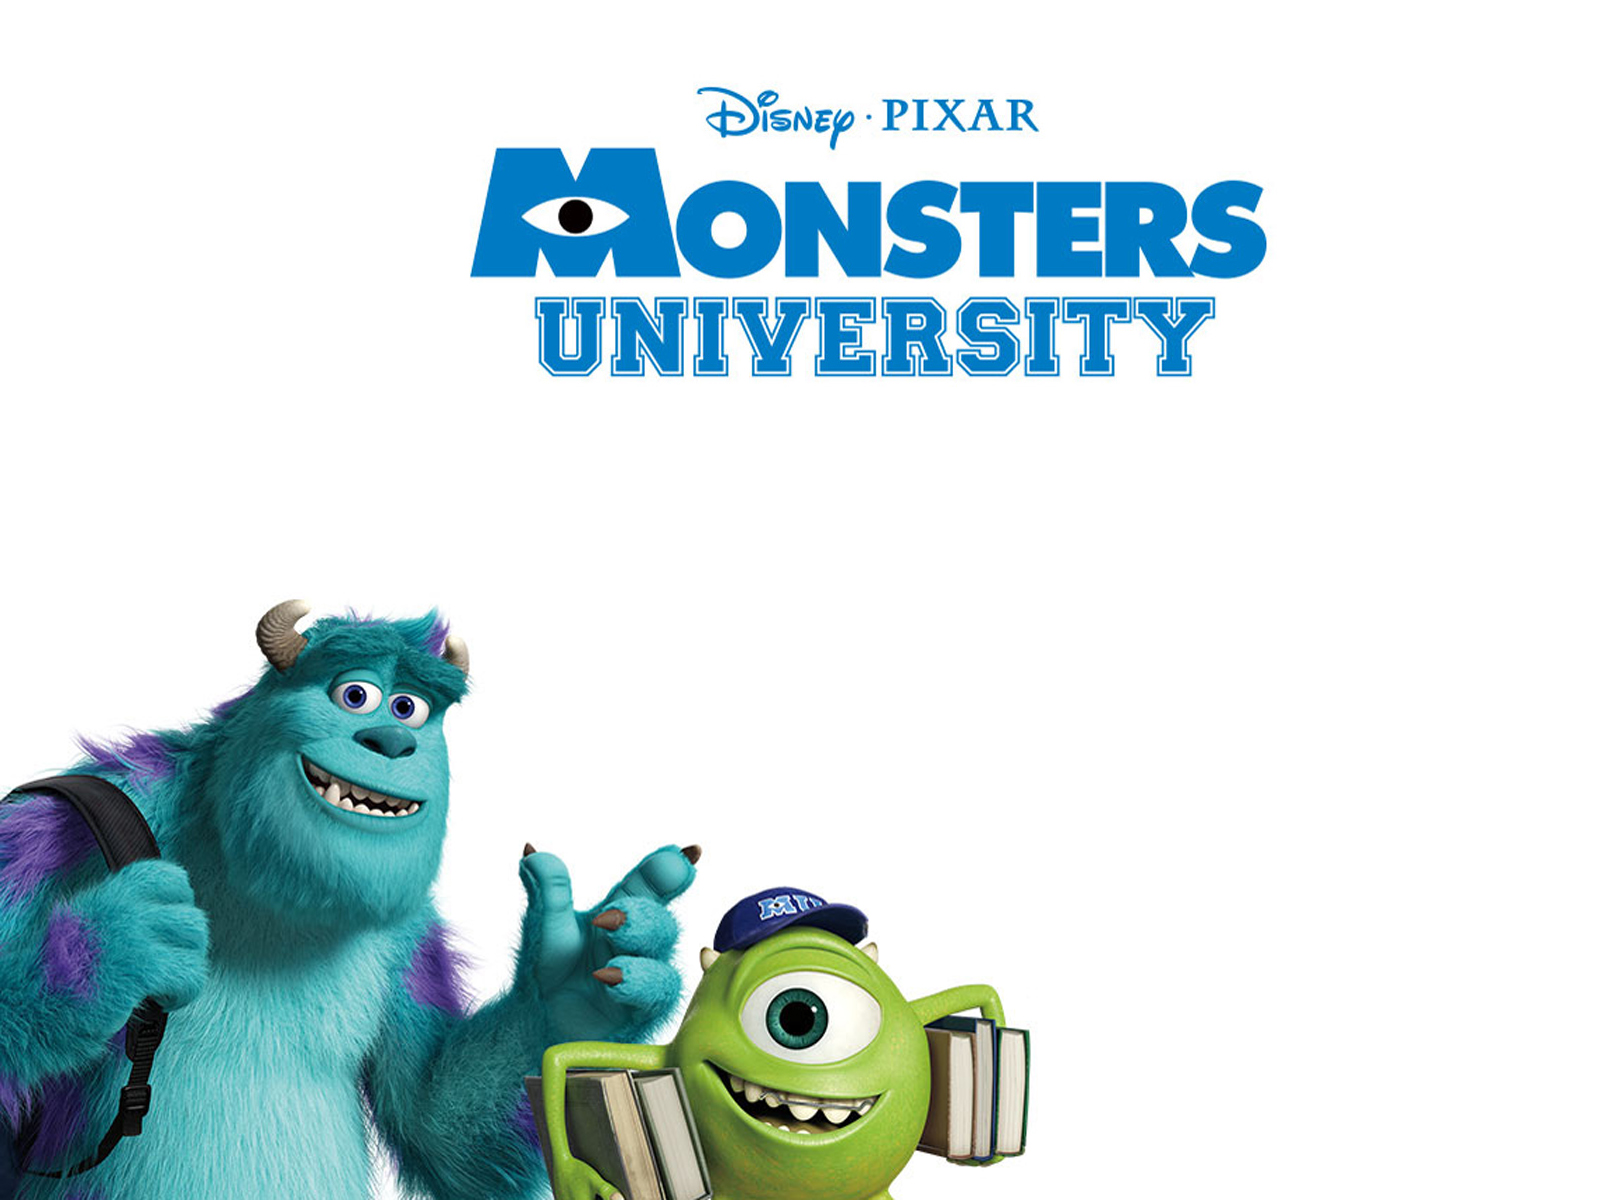 https://blogger.googleusercontent.com/img/b/R29vZ2xl/AVvXsEiN23habysJItquLIt5AGwuDvJe0TpbkiMiJShI5m1NMFFe4Zoai3dgkZAK5m3DeHX7KYOHCopHtmFpg8FaNHtXJgsfsG2pPfd-UE9UHn-qLW34l-Y_dEJrwIxnUlp3LXSHJ5T_tO_g8q0/s1600/Pixar-Monsters-University-HD-Wallpaper_Vvallpaper.Net.jpg